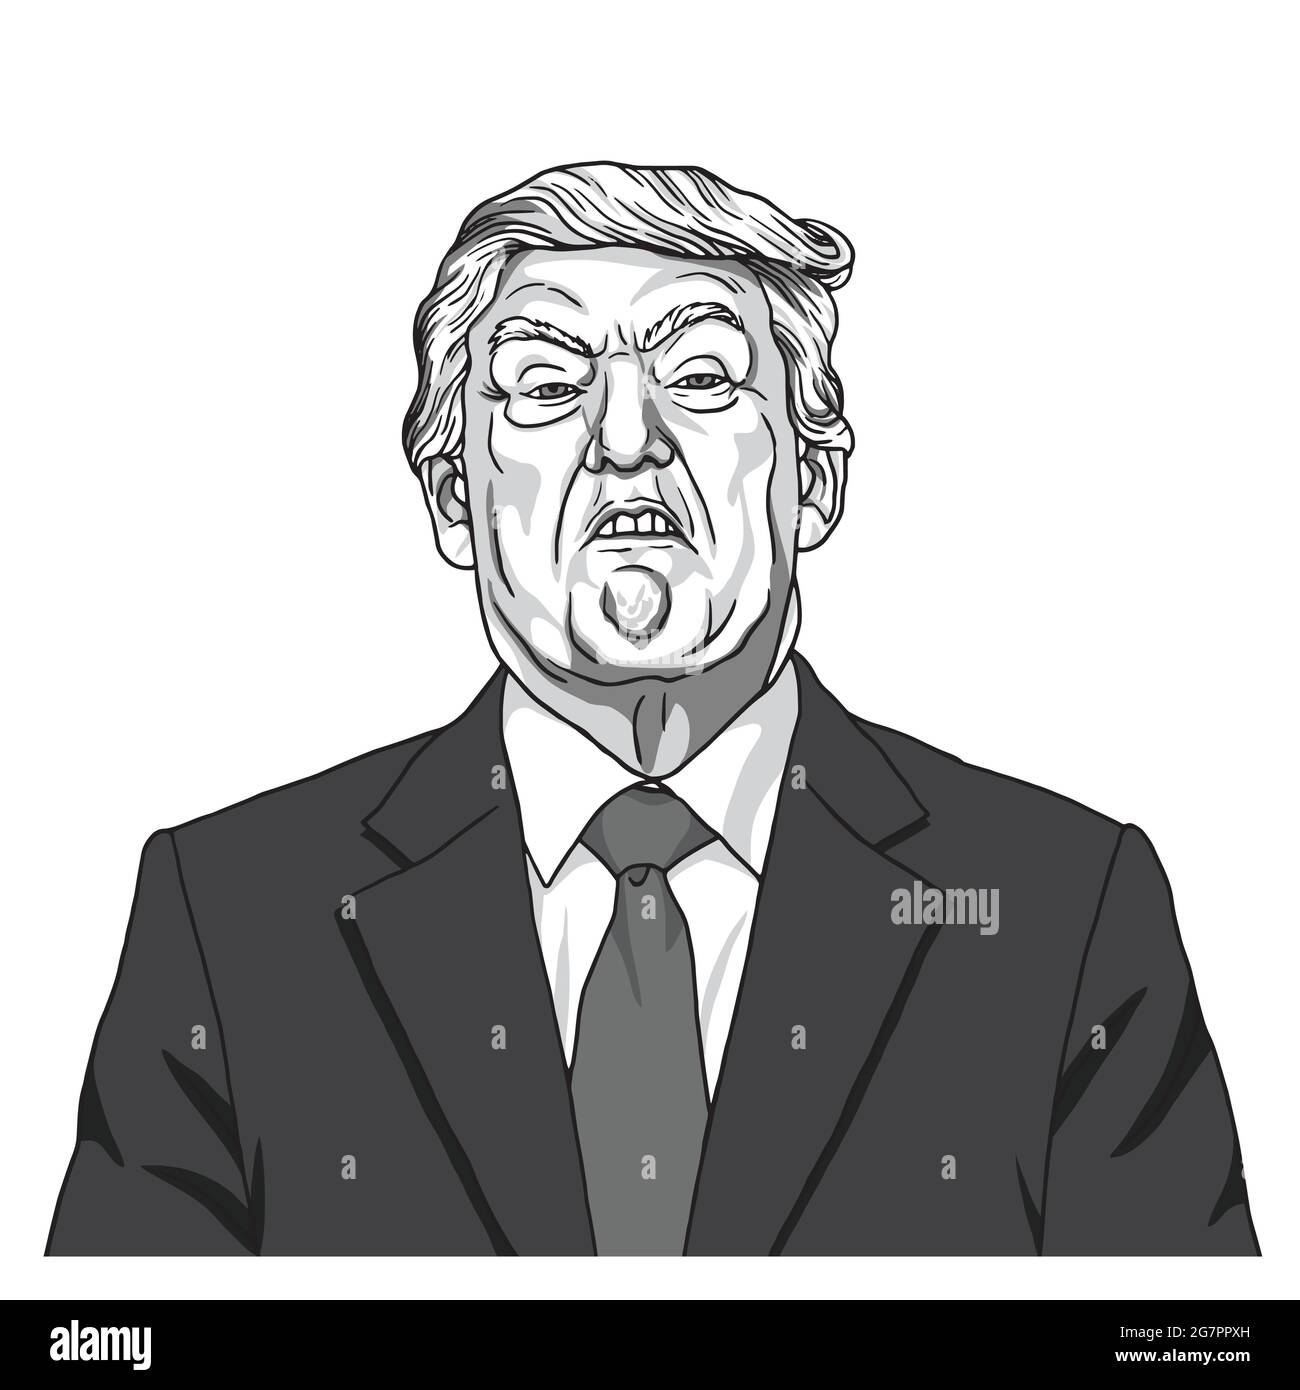 Donald Trump Portrait. Black and White Caricature Illustration Vector Stock Vector